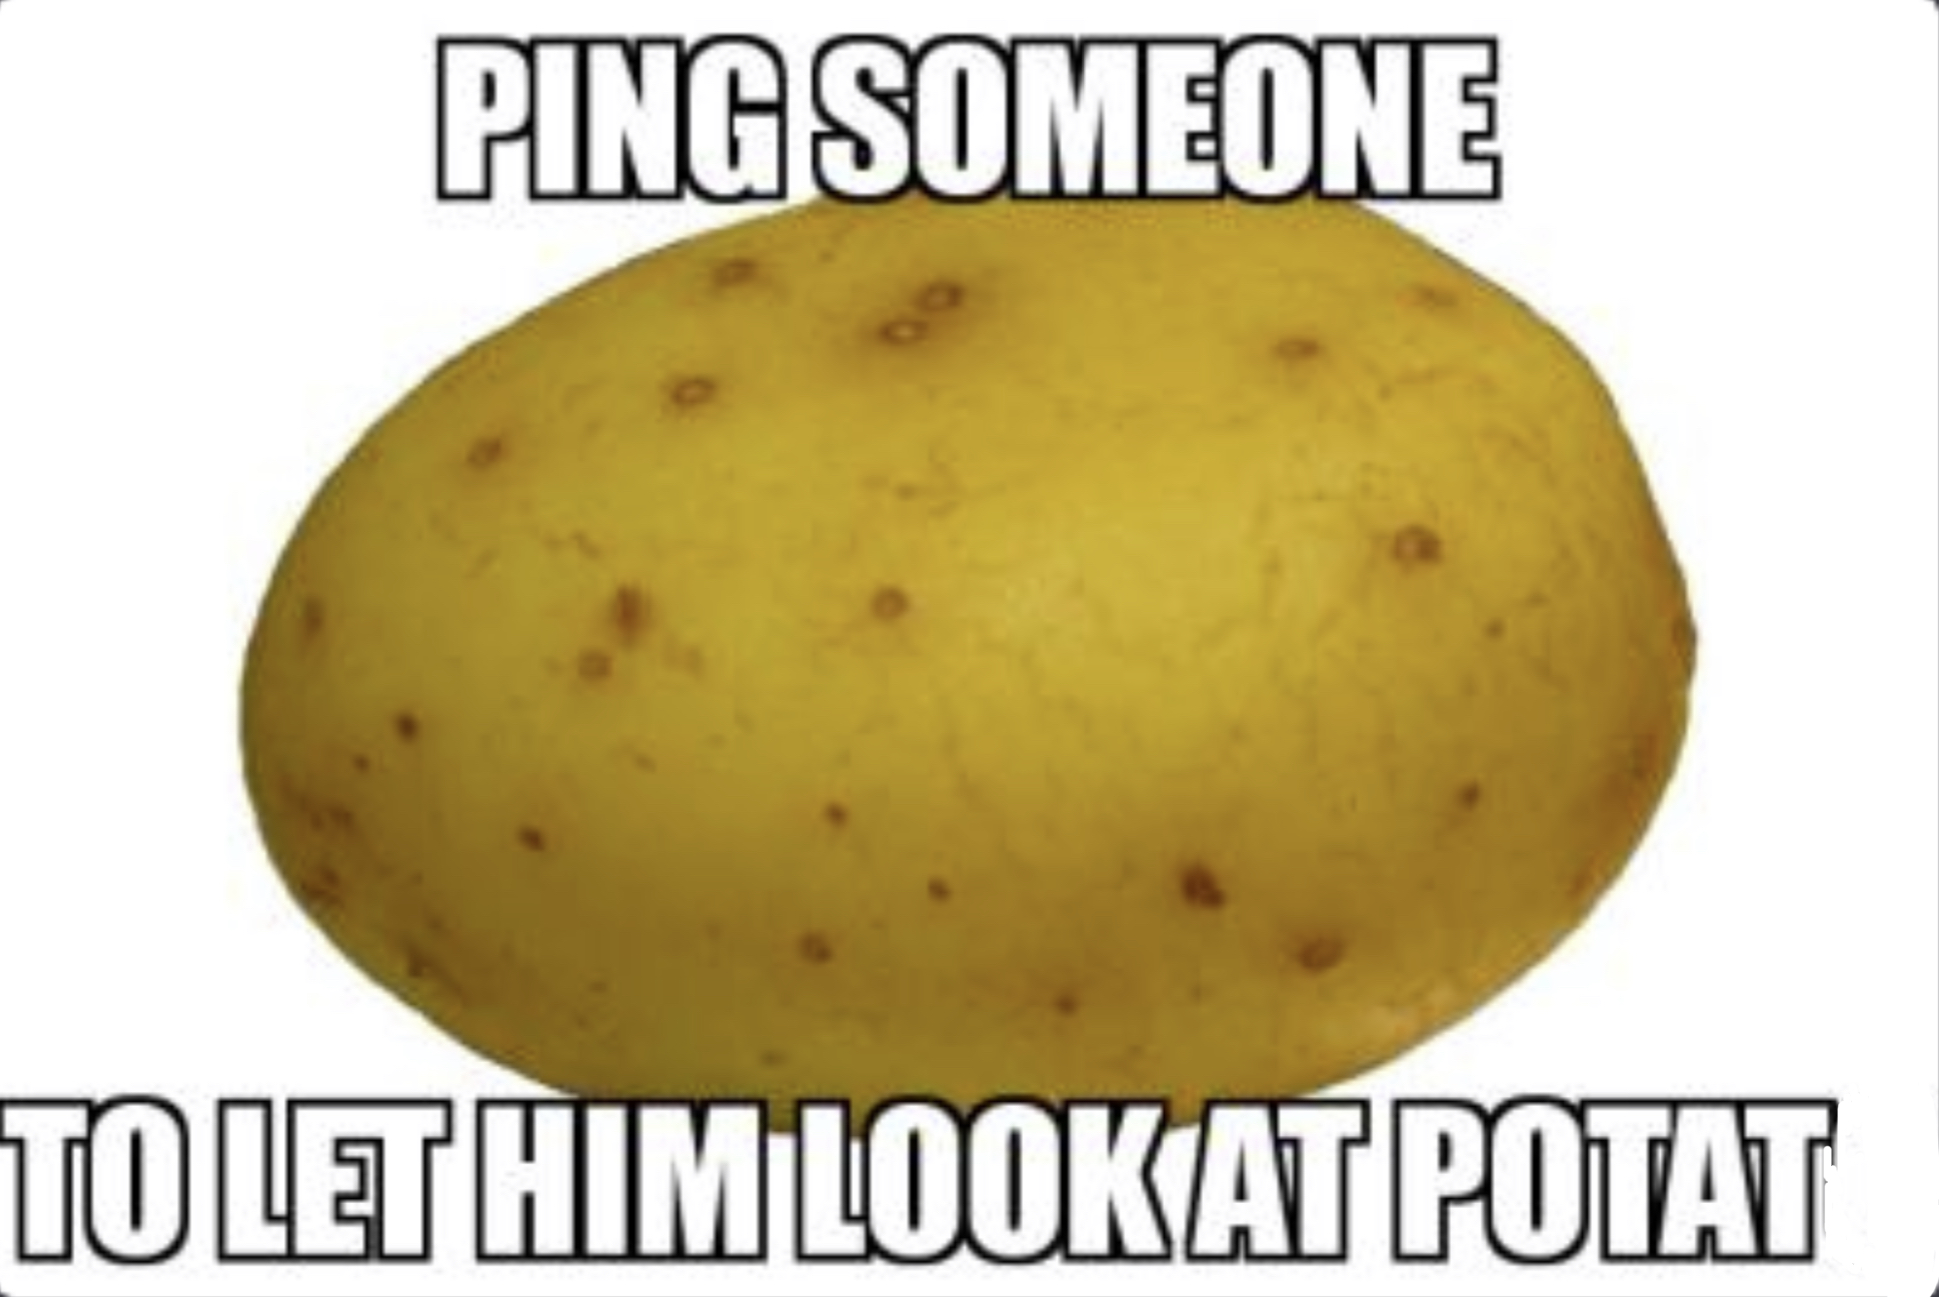 High Quality potat Blank Meme Template